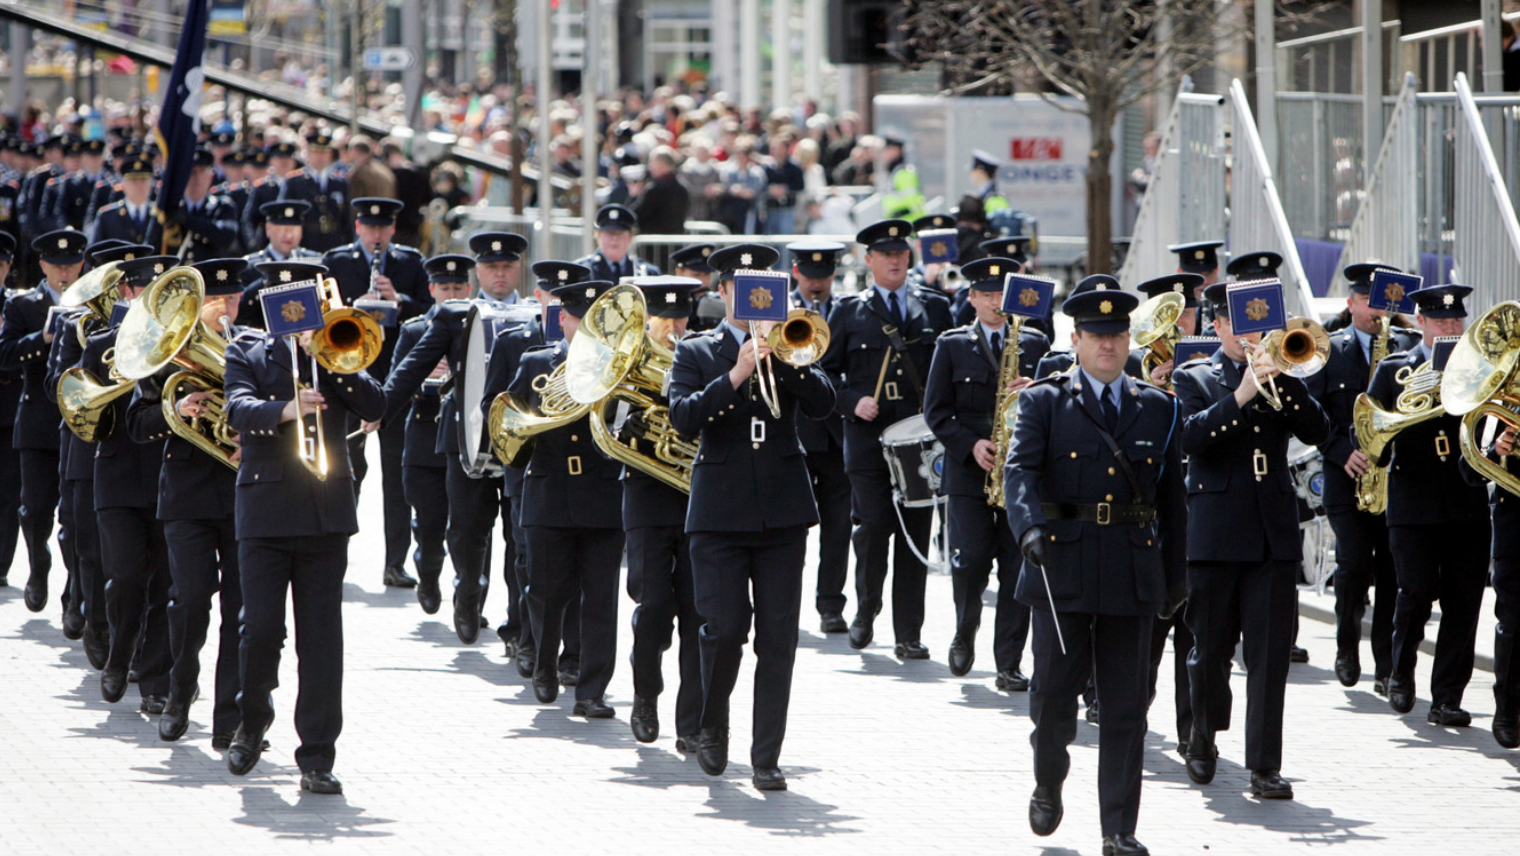 The Garda marching band playing